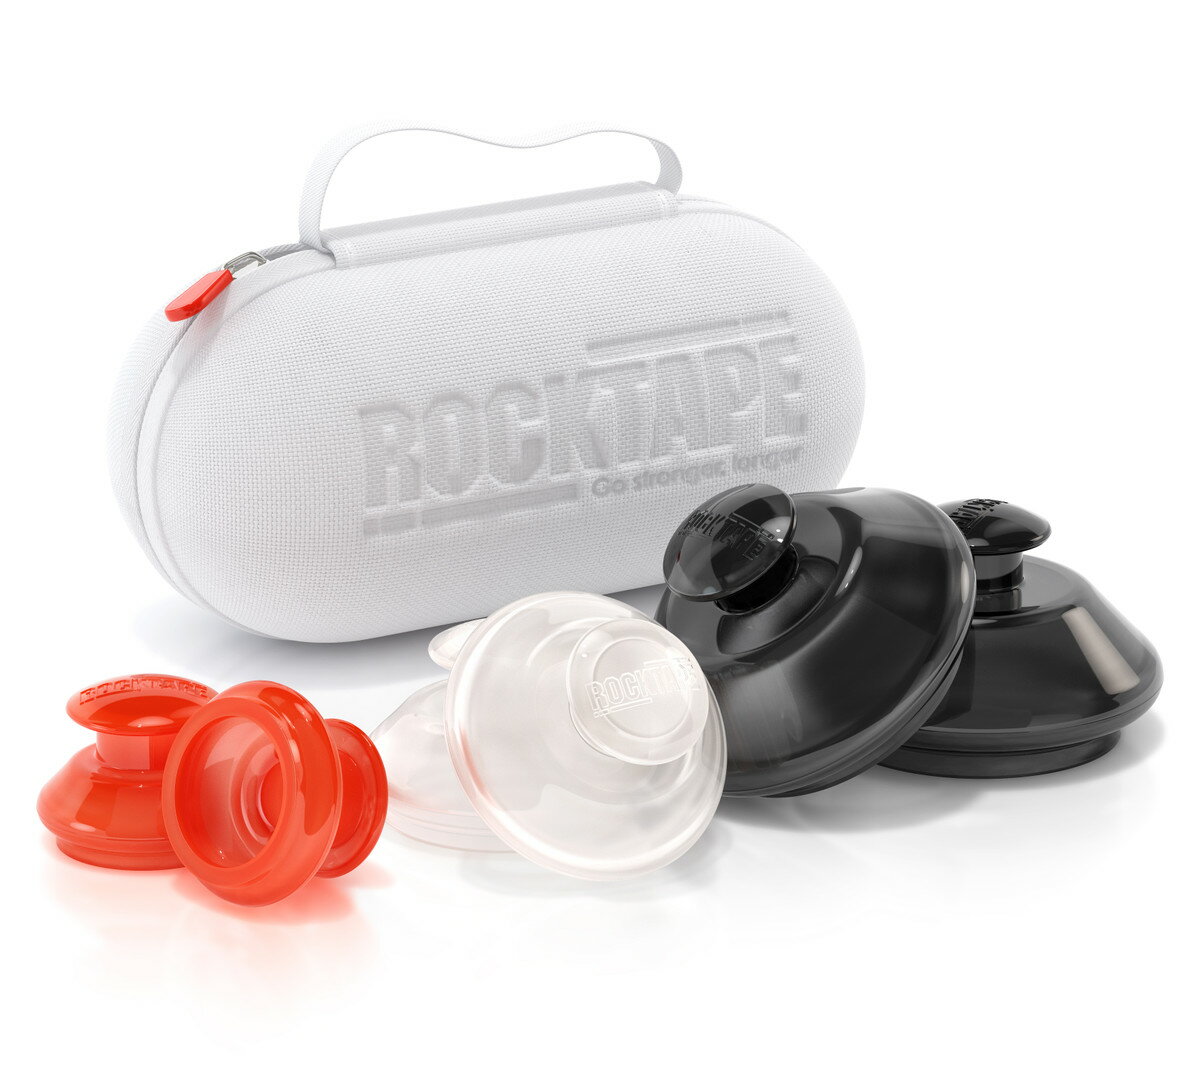 美國《ROCKTAPE》洛克貼 ROCKPODS GLIDE 肌筋膜滑罐